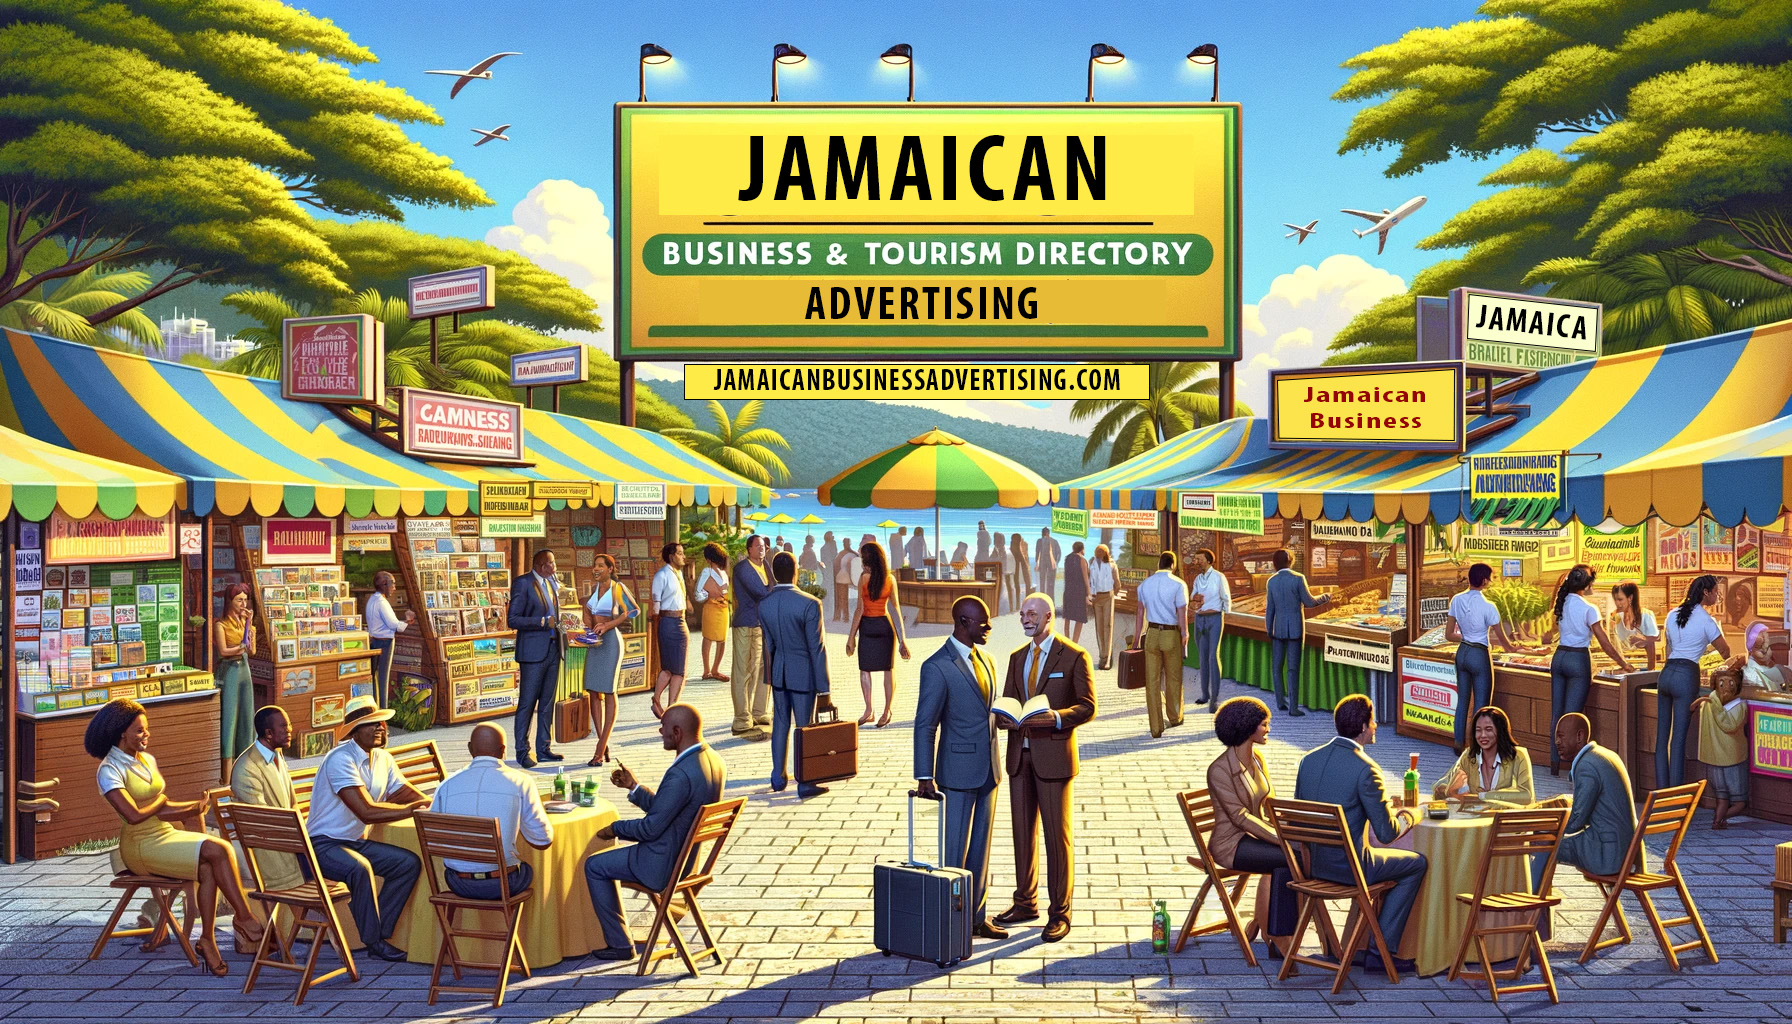 Jamaican Business & Tourism Directory Advertising & Marketing - JamaicanBusinessAdvertising.com